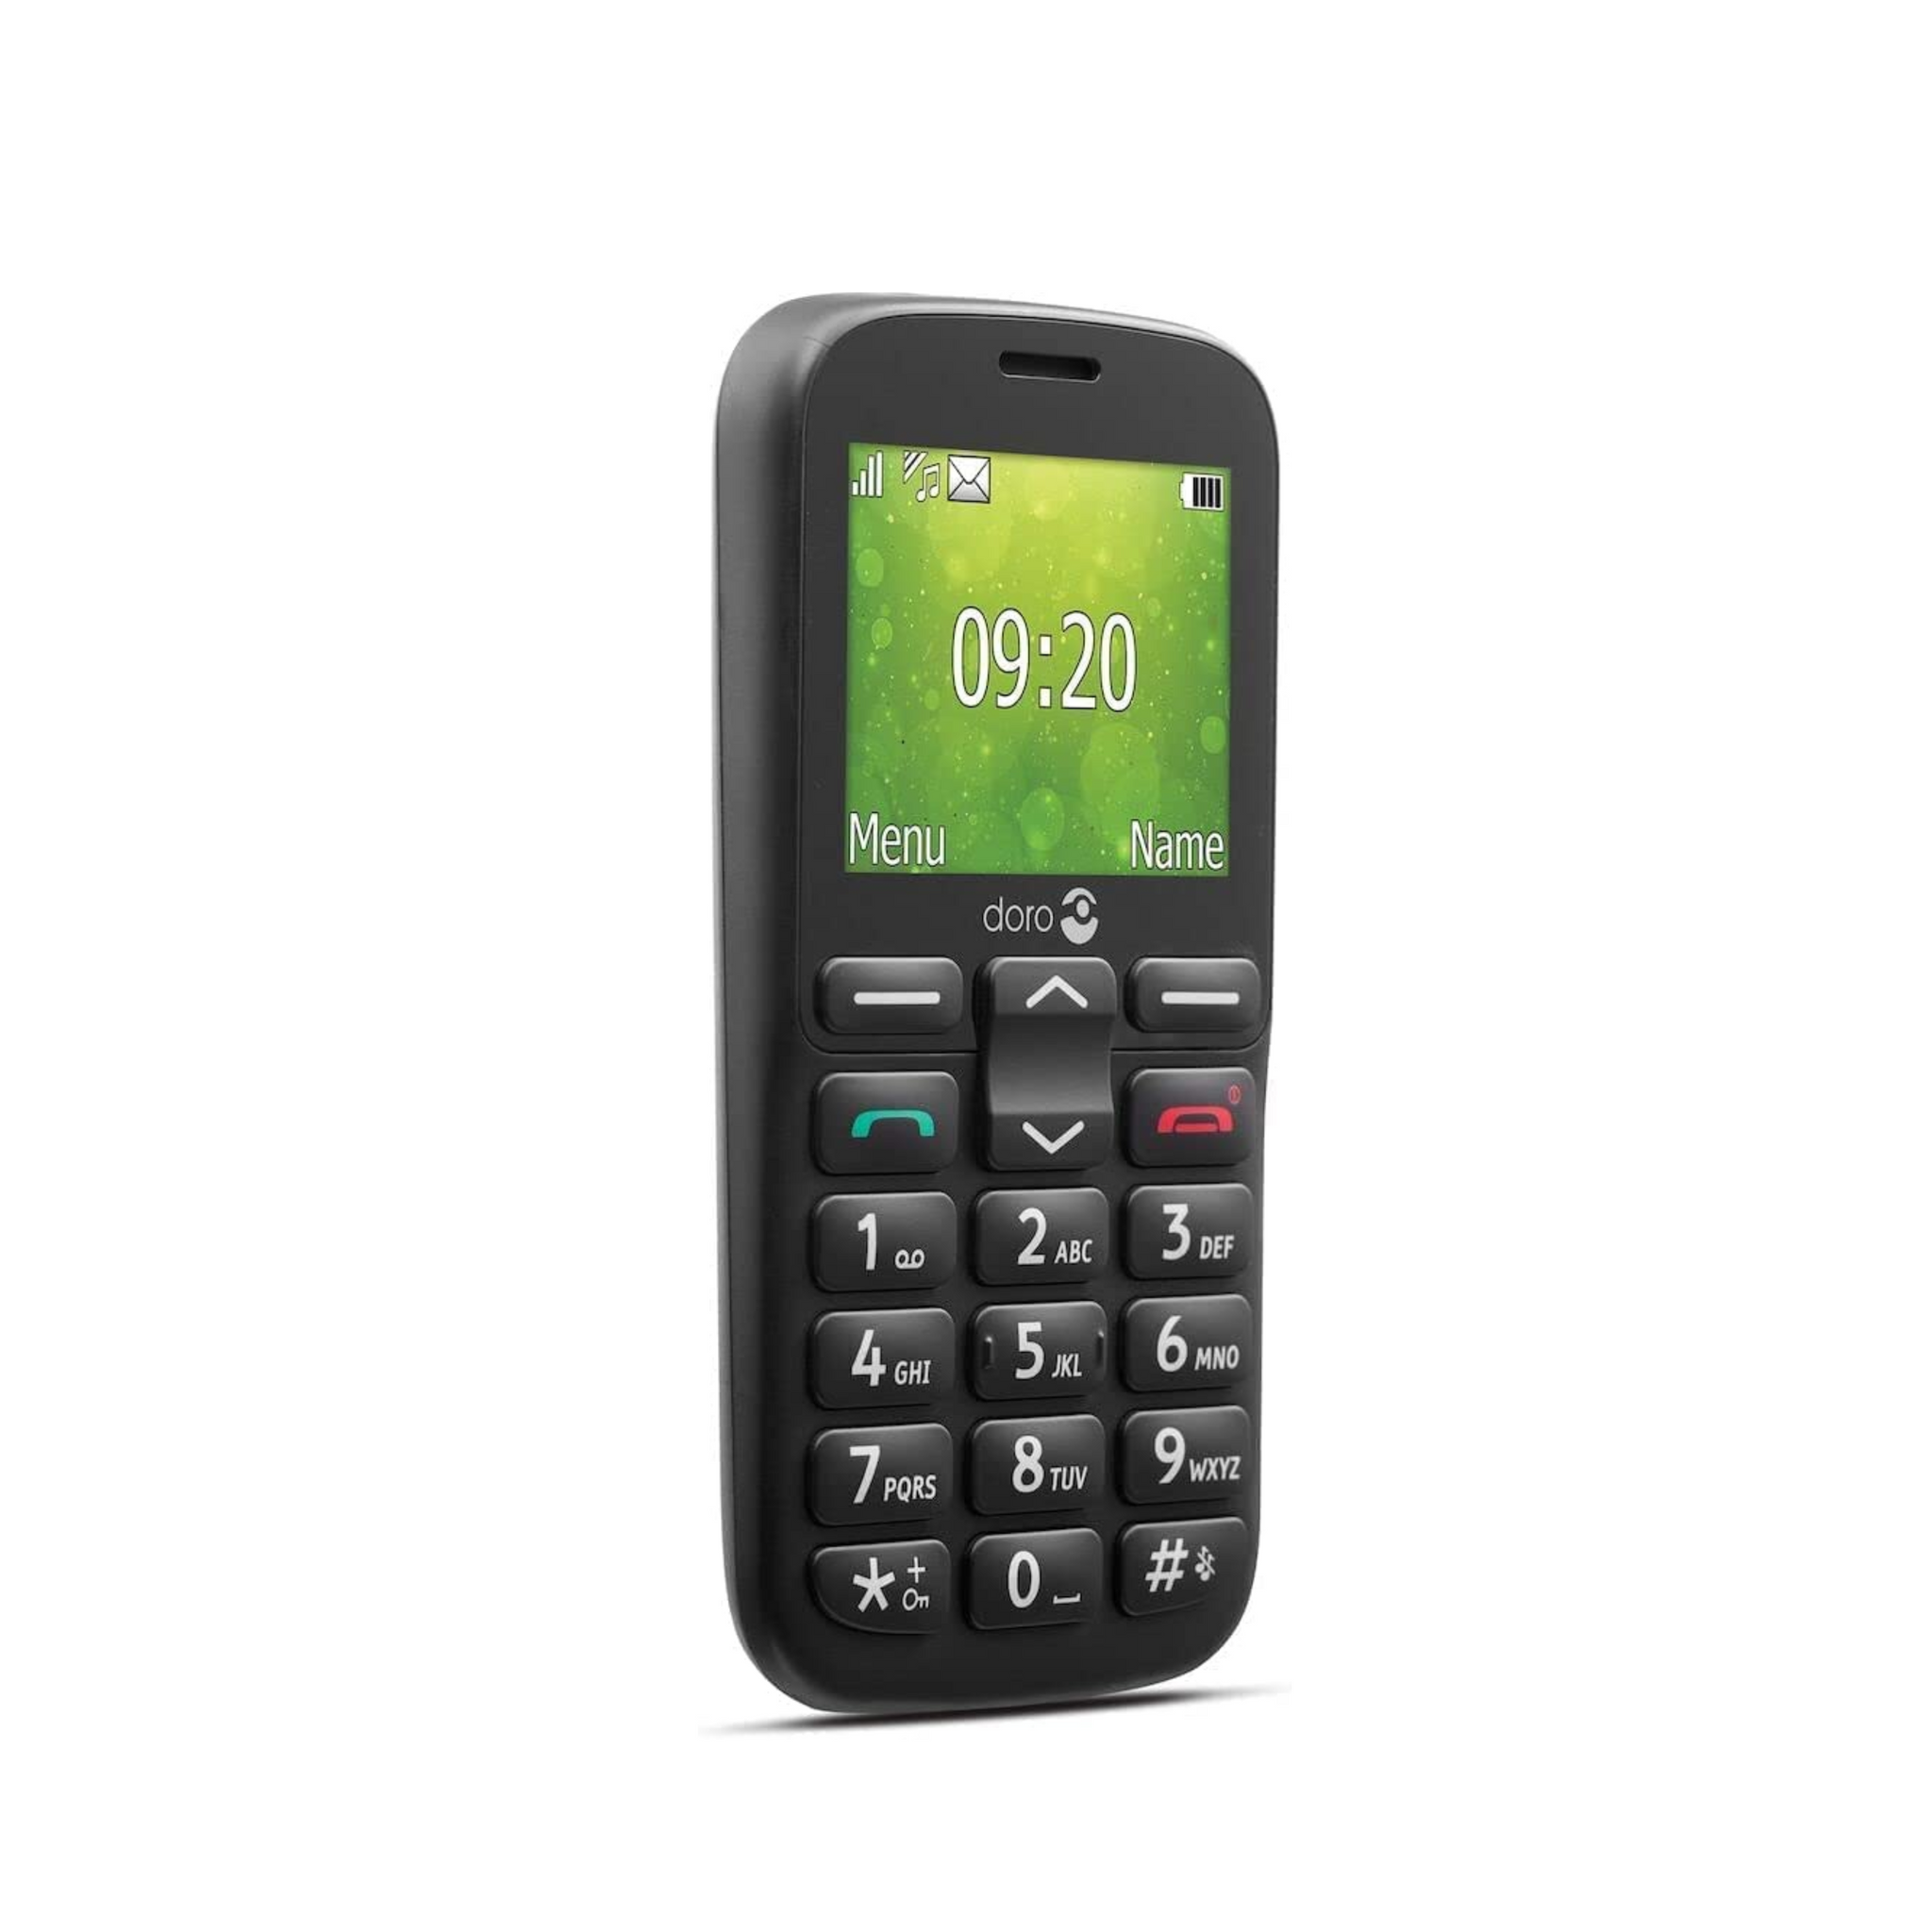 Doro 1380 Mobile Phone